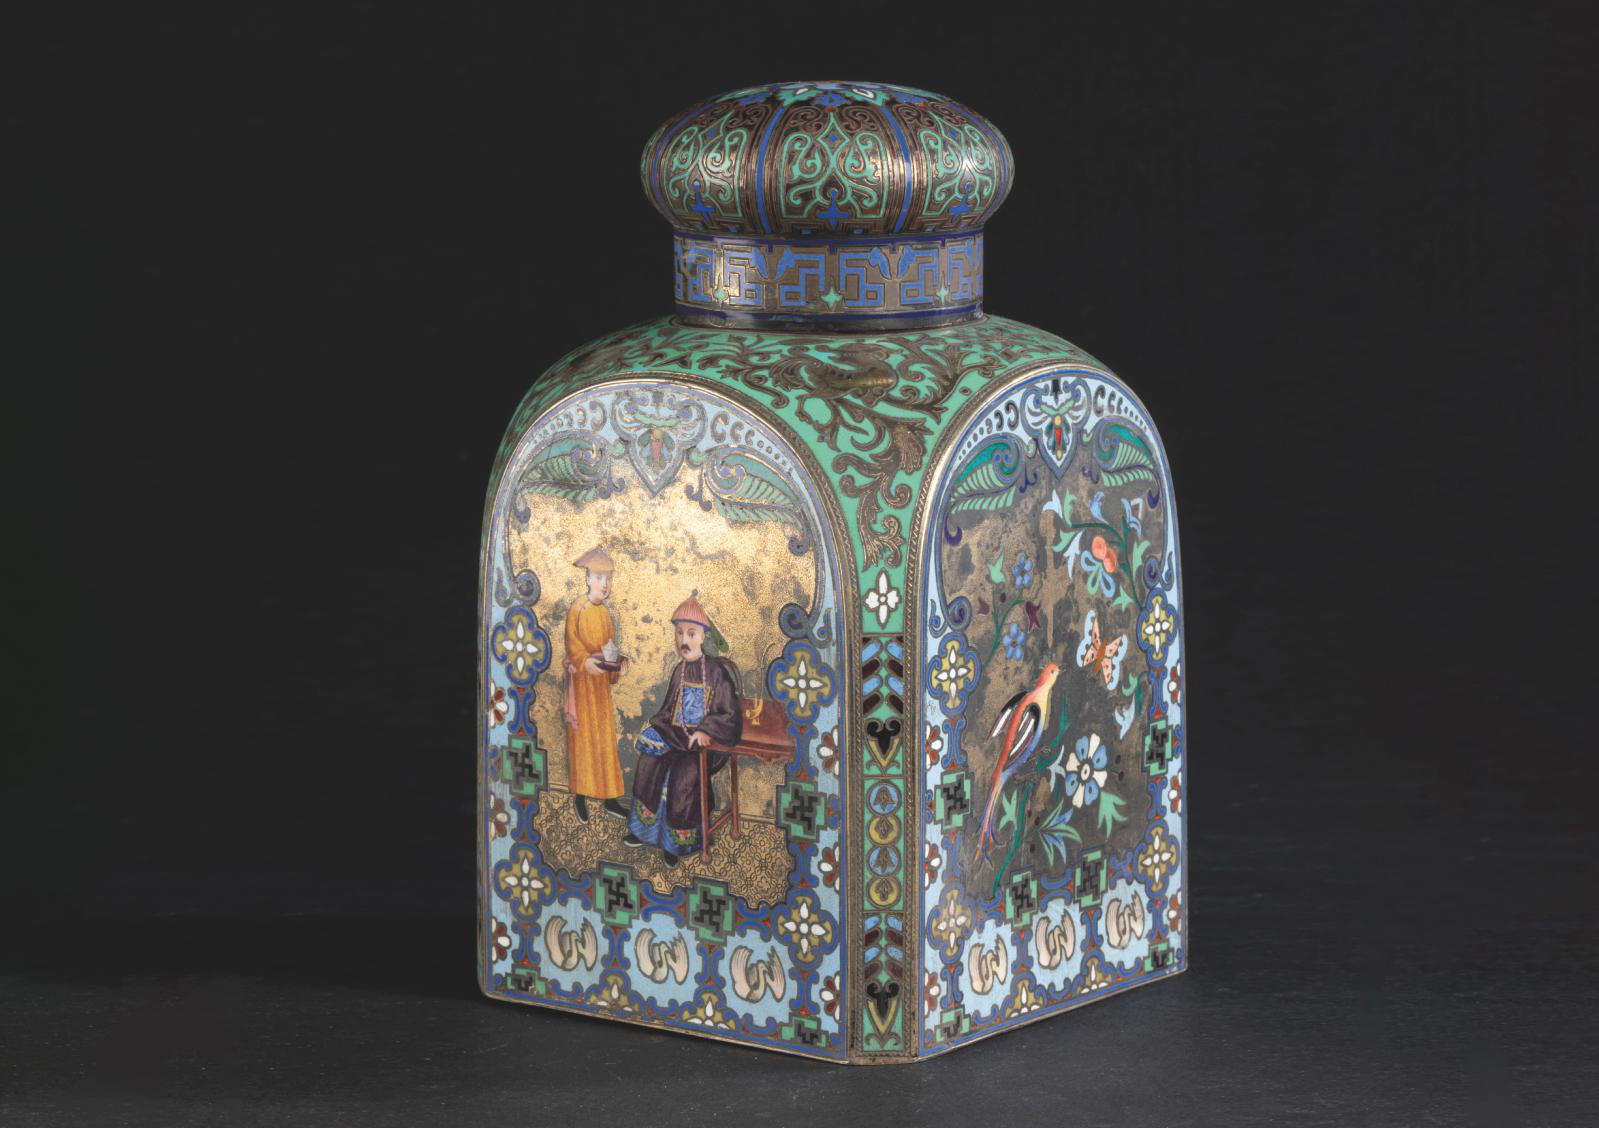 Pavel Ovchinnikov's Tea Box for a Tsar 